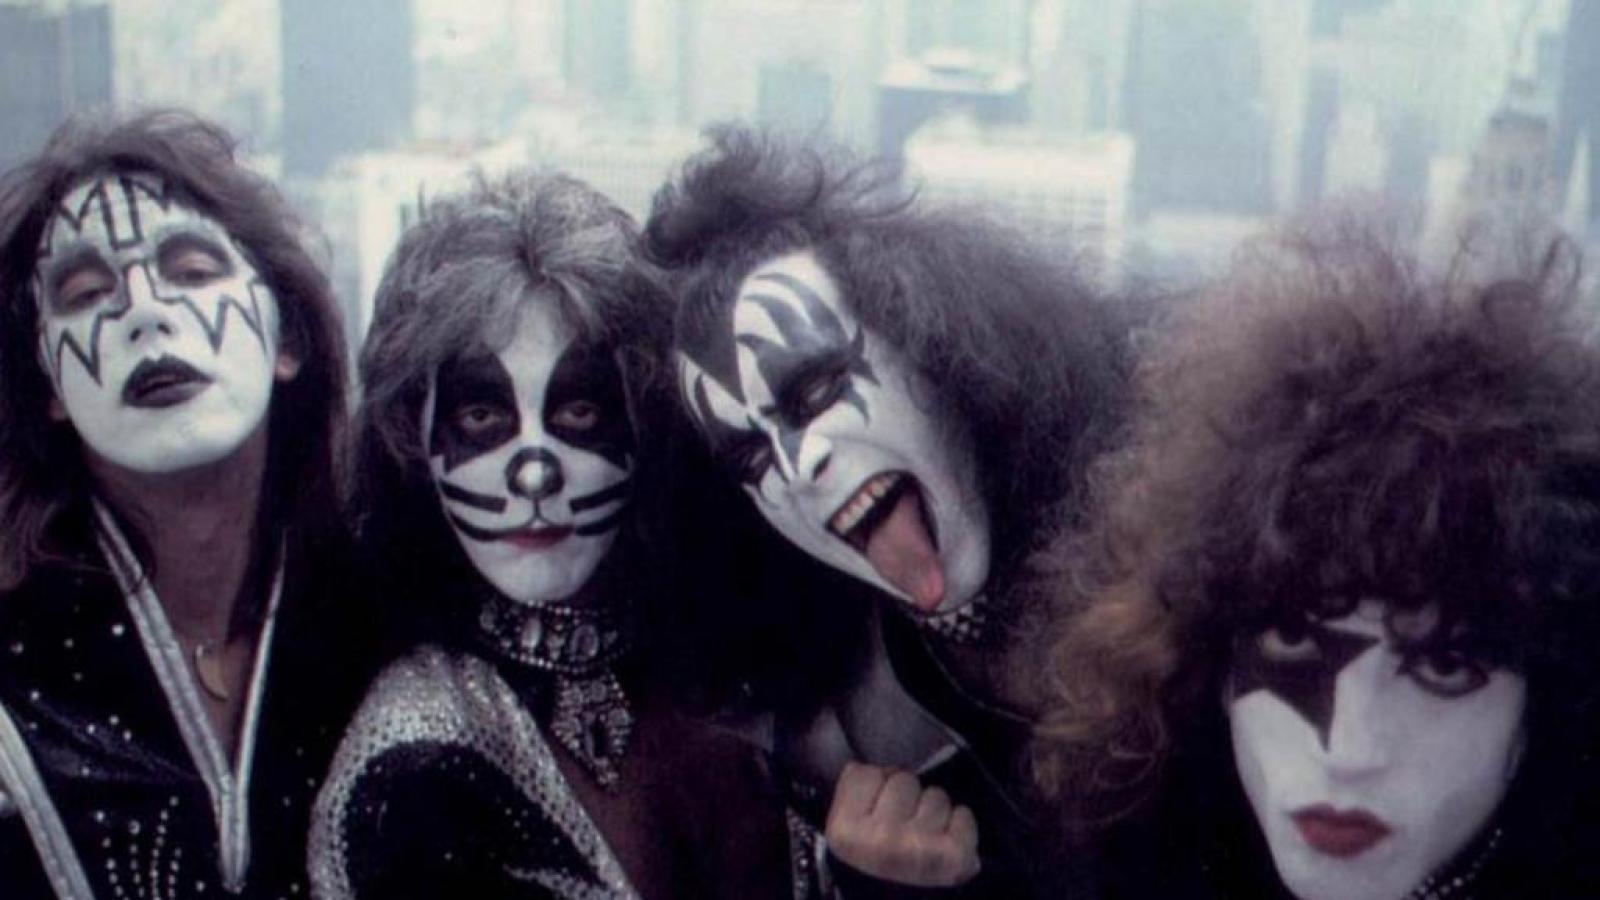 Kiss band 1976 484505 wallpaper - HQ Desktop Wallpapers